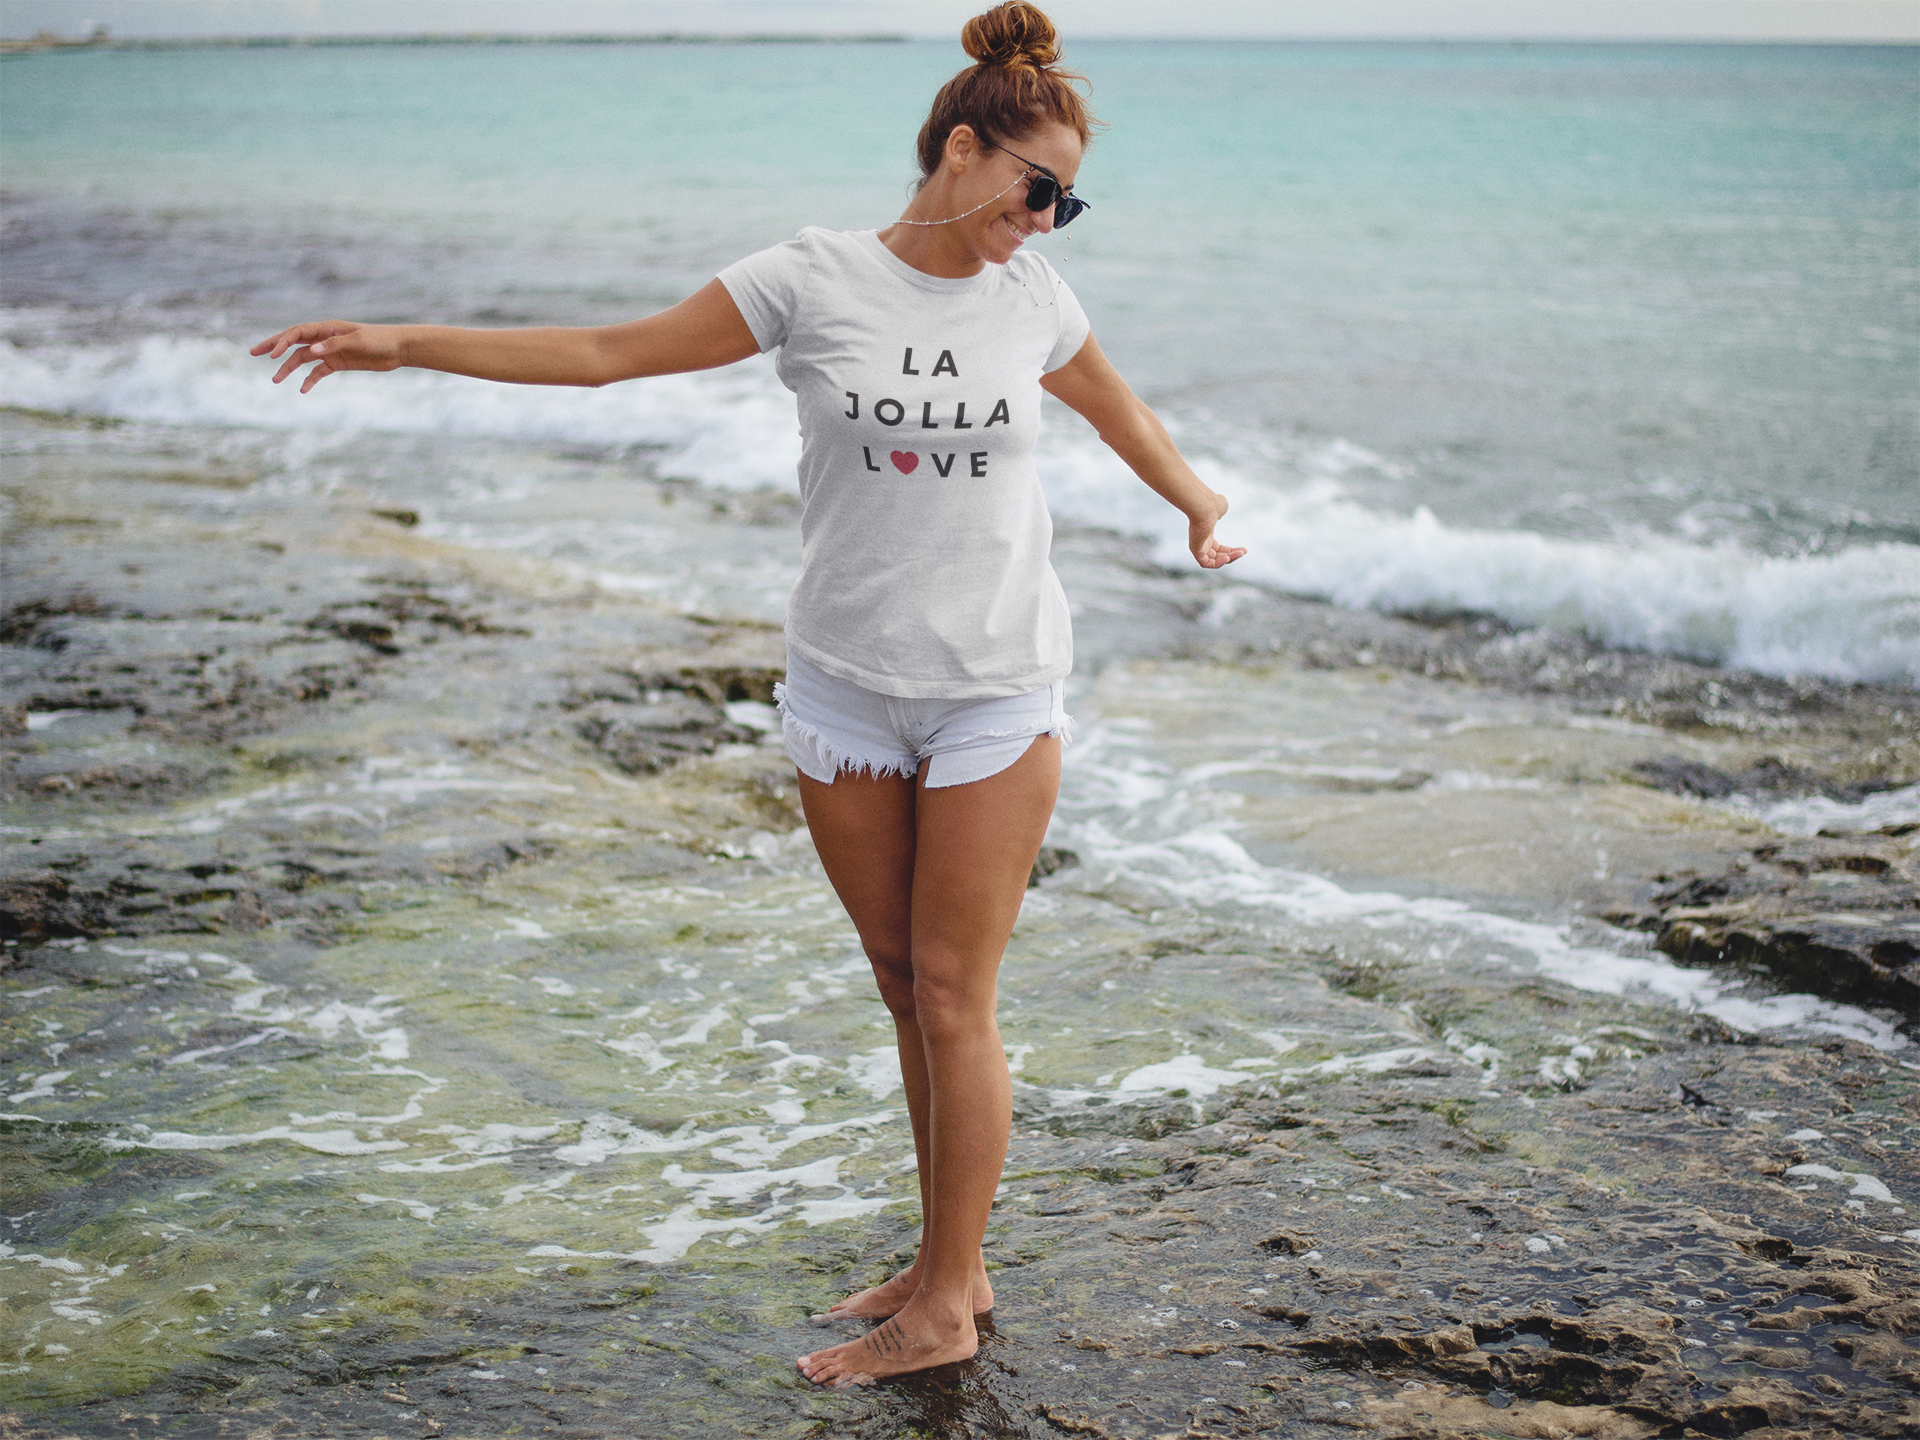 Trendy woman with sunglasses standing in ocean wearing a La Jolla love t-shirt.